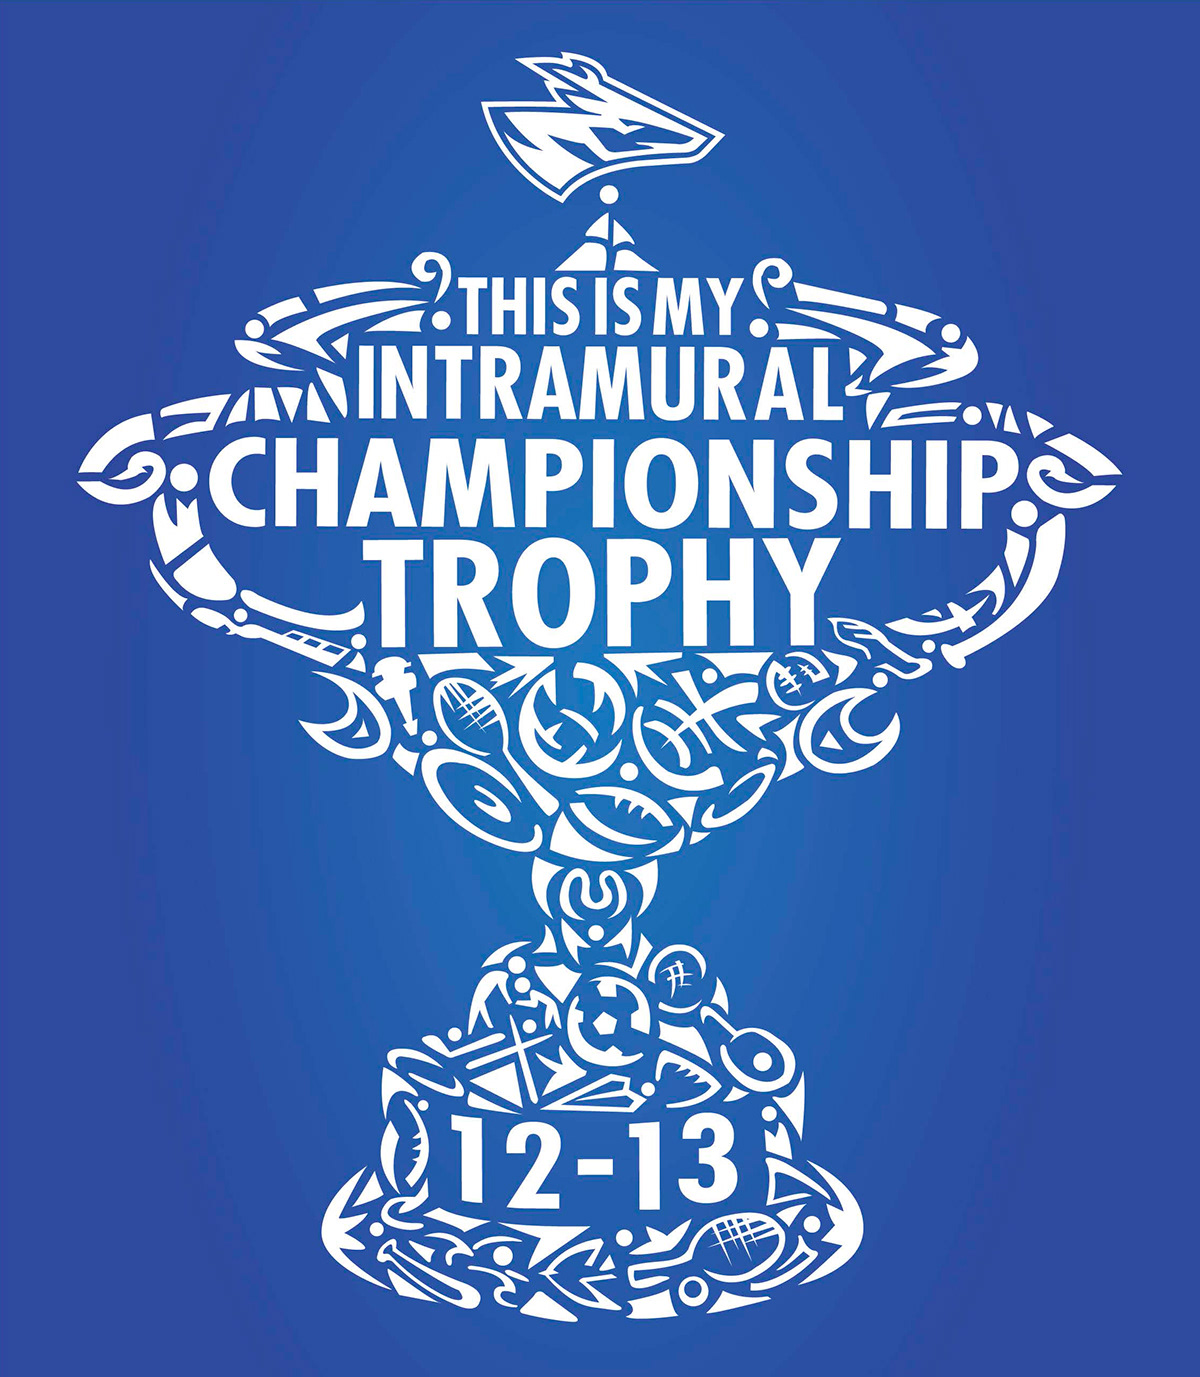 Intramurals shirts t-shirts sports Champions trophy shirt design Lopers UNK